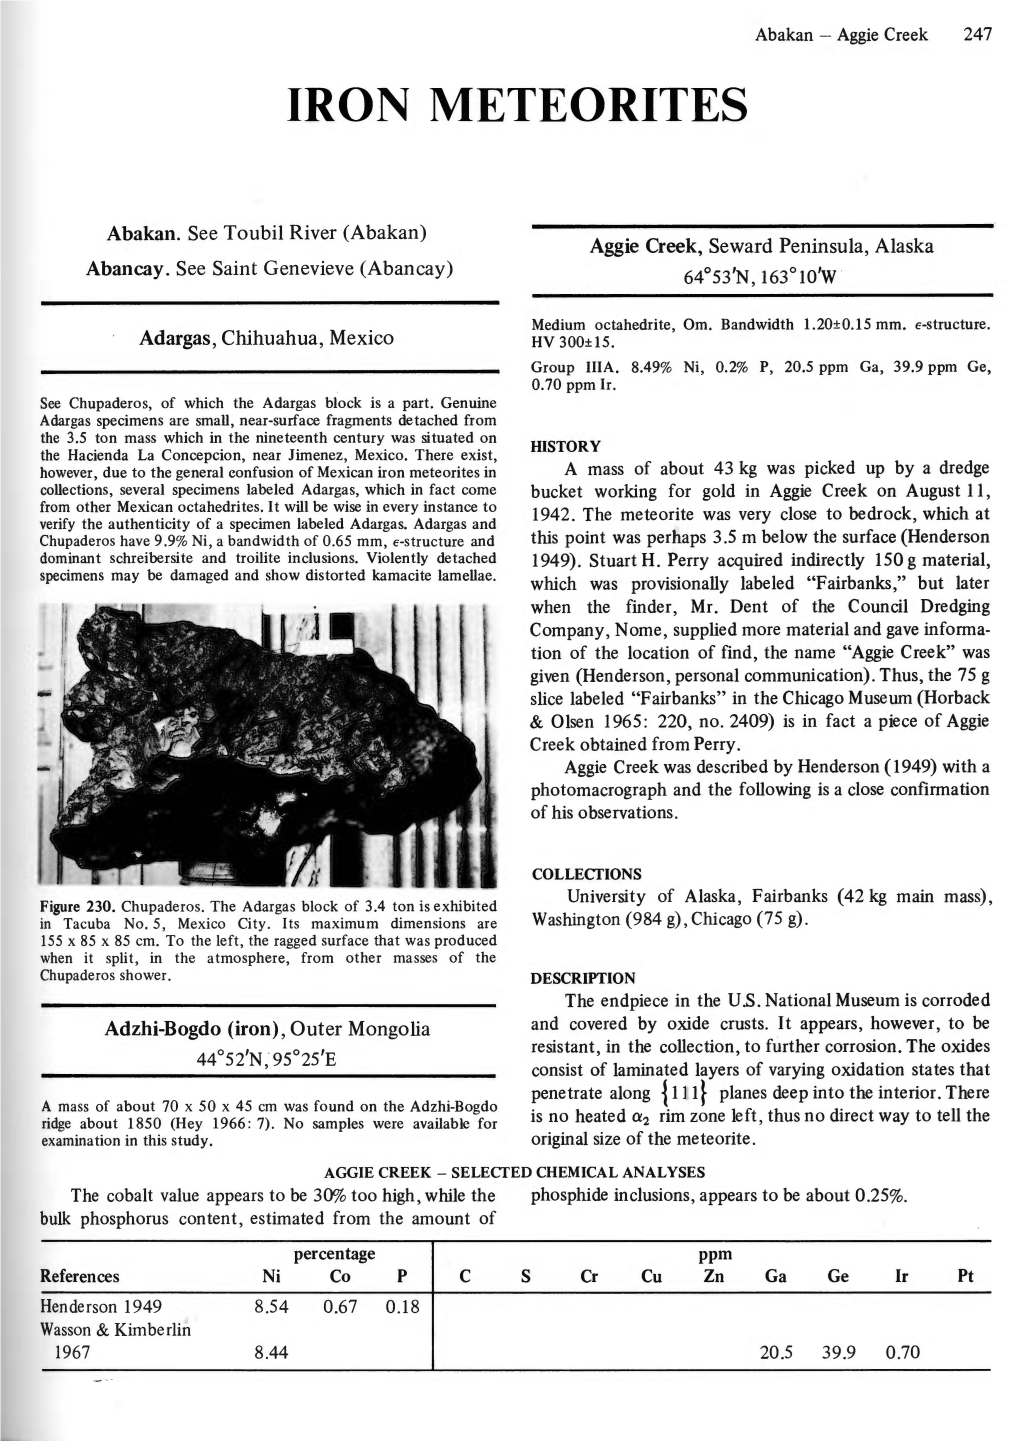 Handbook of Iron Meteorites, Volume 2 (Abakan